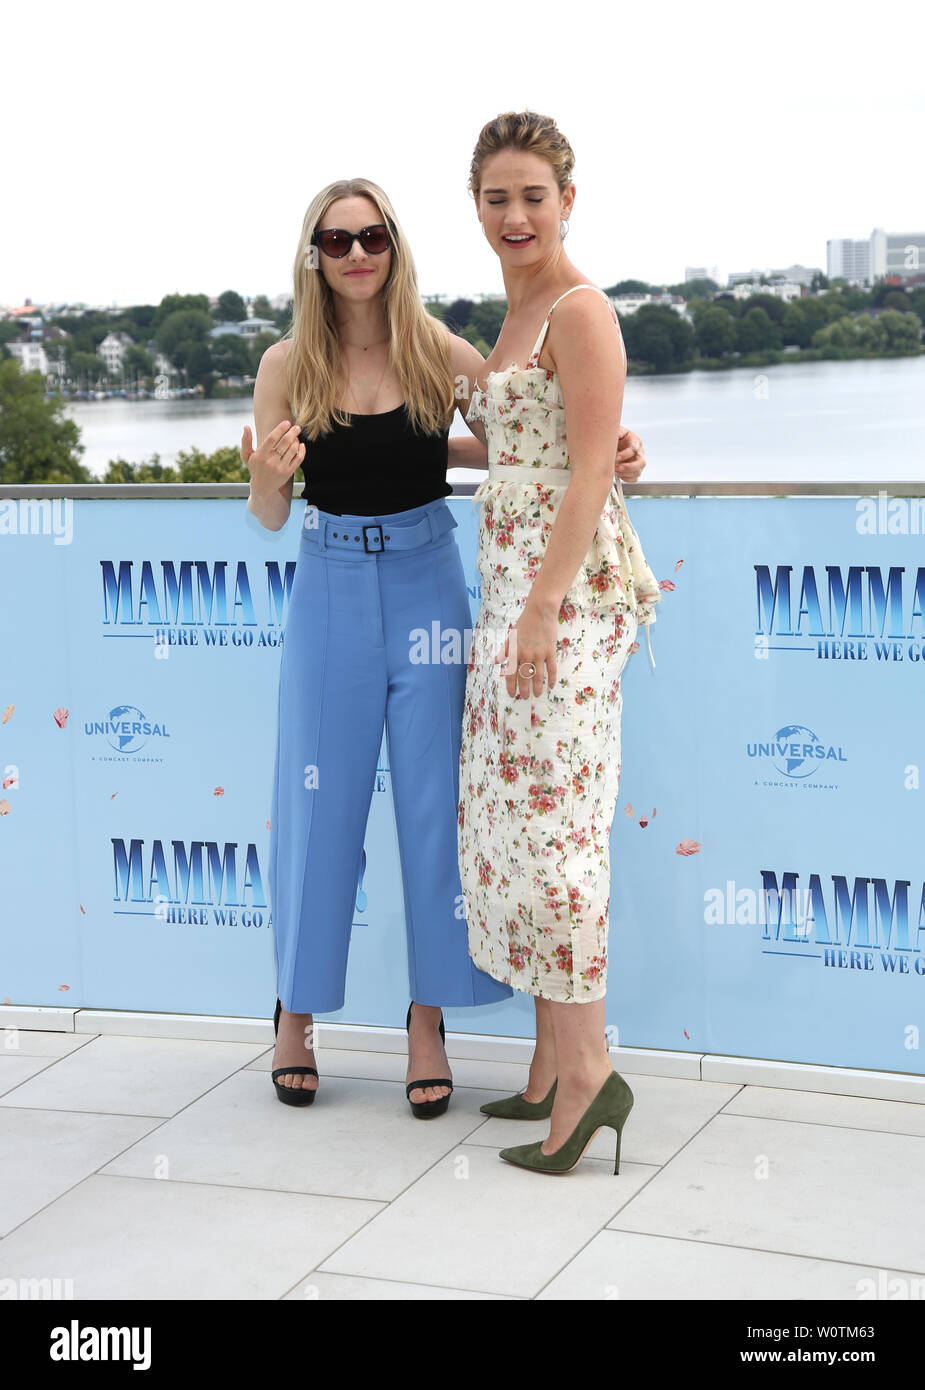 Lily James and Amanda Seyfried, Mamma Mia 2 ! Here We Go Again Presscall in  Hamburg,12.07.2018 Stock Photo - Alamy